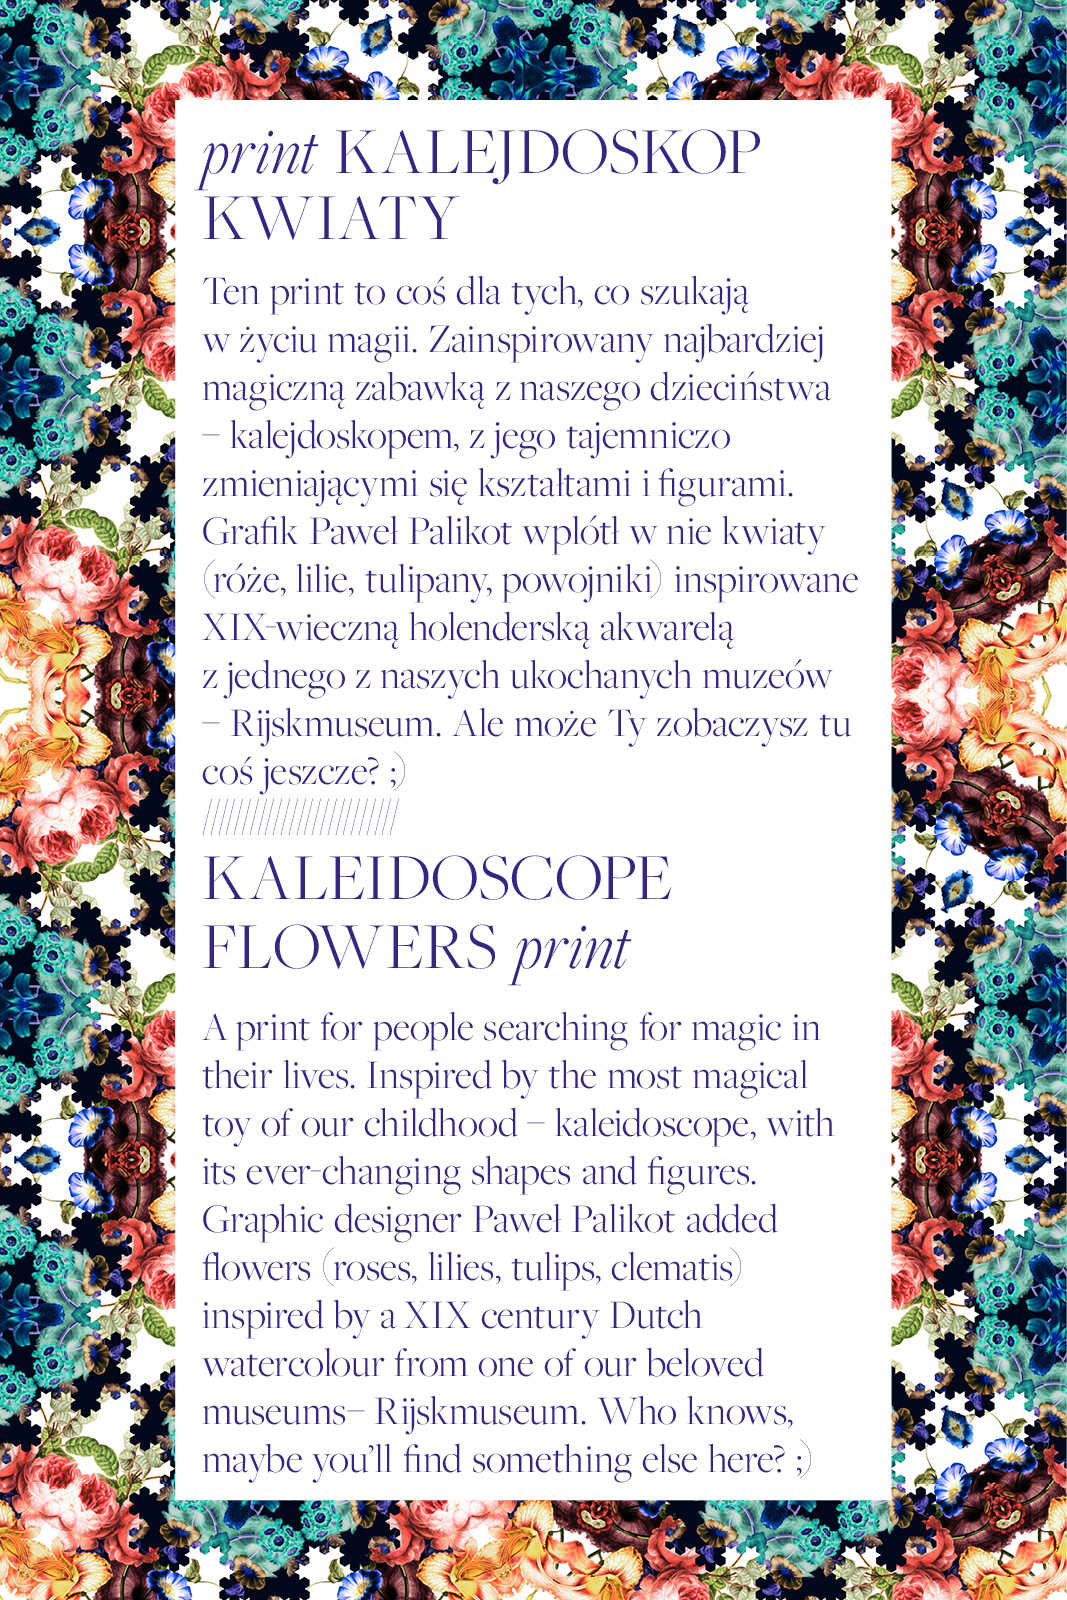 CRAZY IN LOVE flowers kaleidoscope print